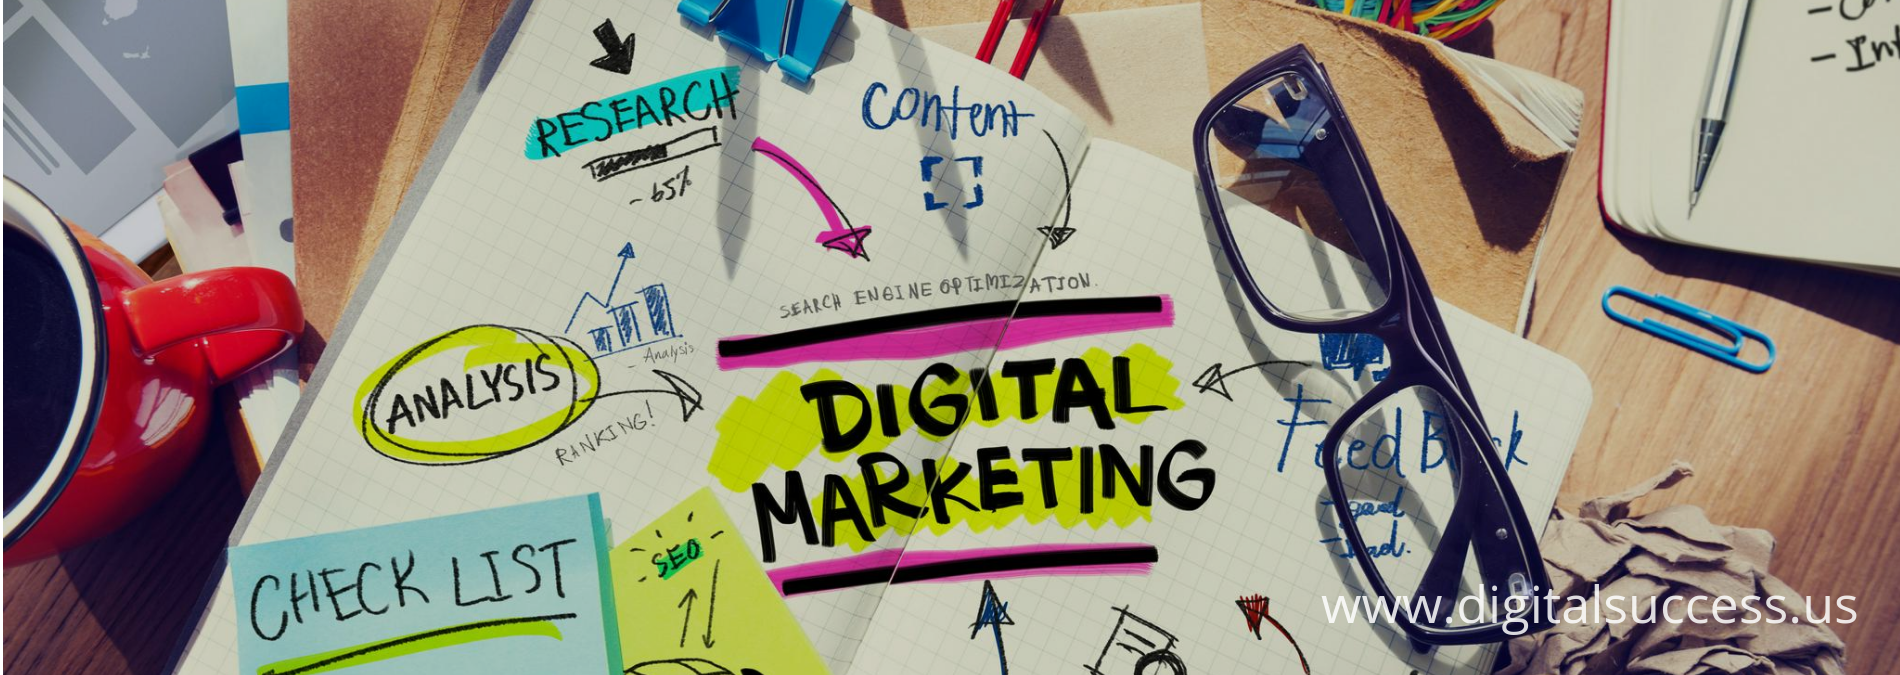 Digital Marketing Strategy 2018